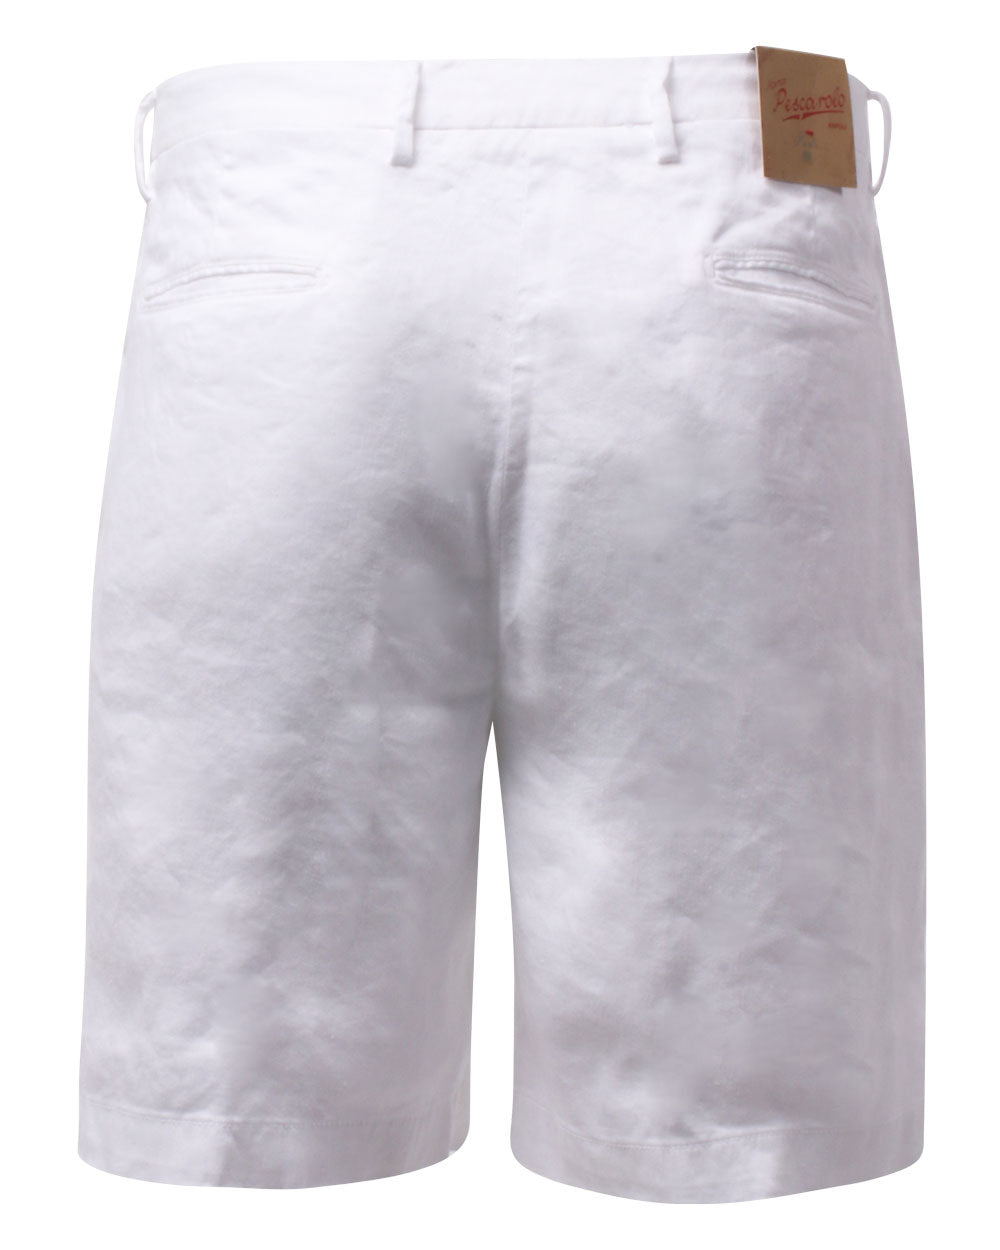 White Lined Bermuda Shorts